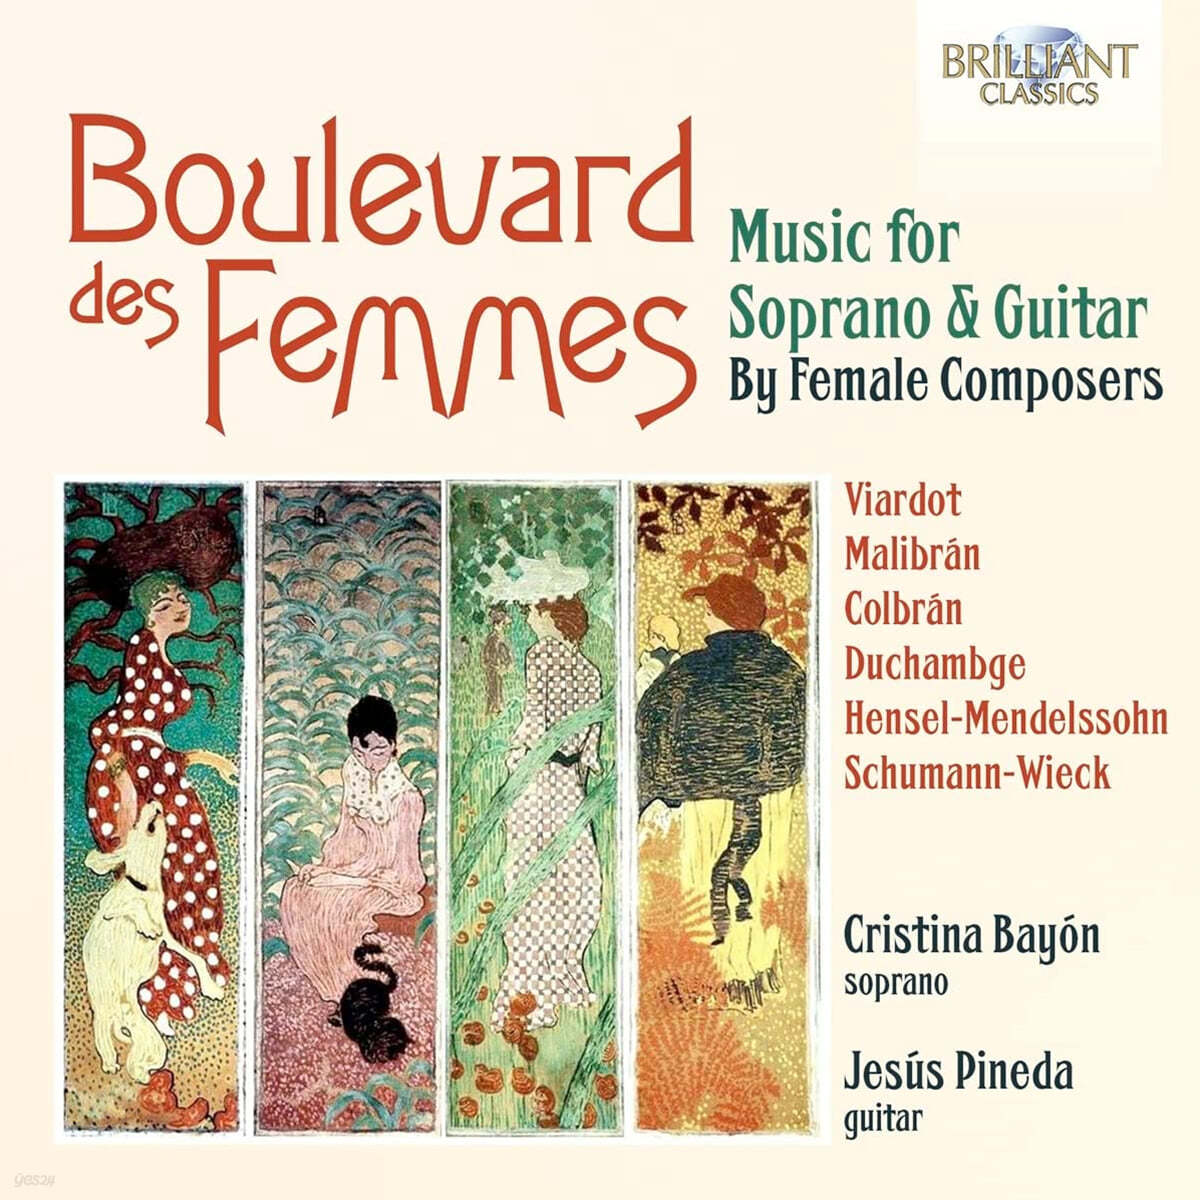 Cristina Bayon / Jesus Pineda 여성 작곡가들의 소프라노와 기타를 위한 음악 (Music for Soprano &amp; Guitar by Female Composers)